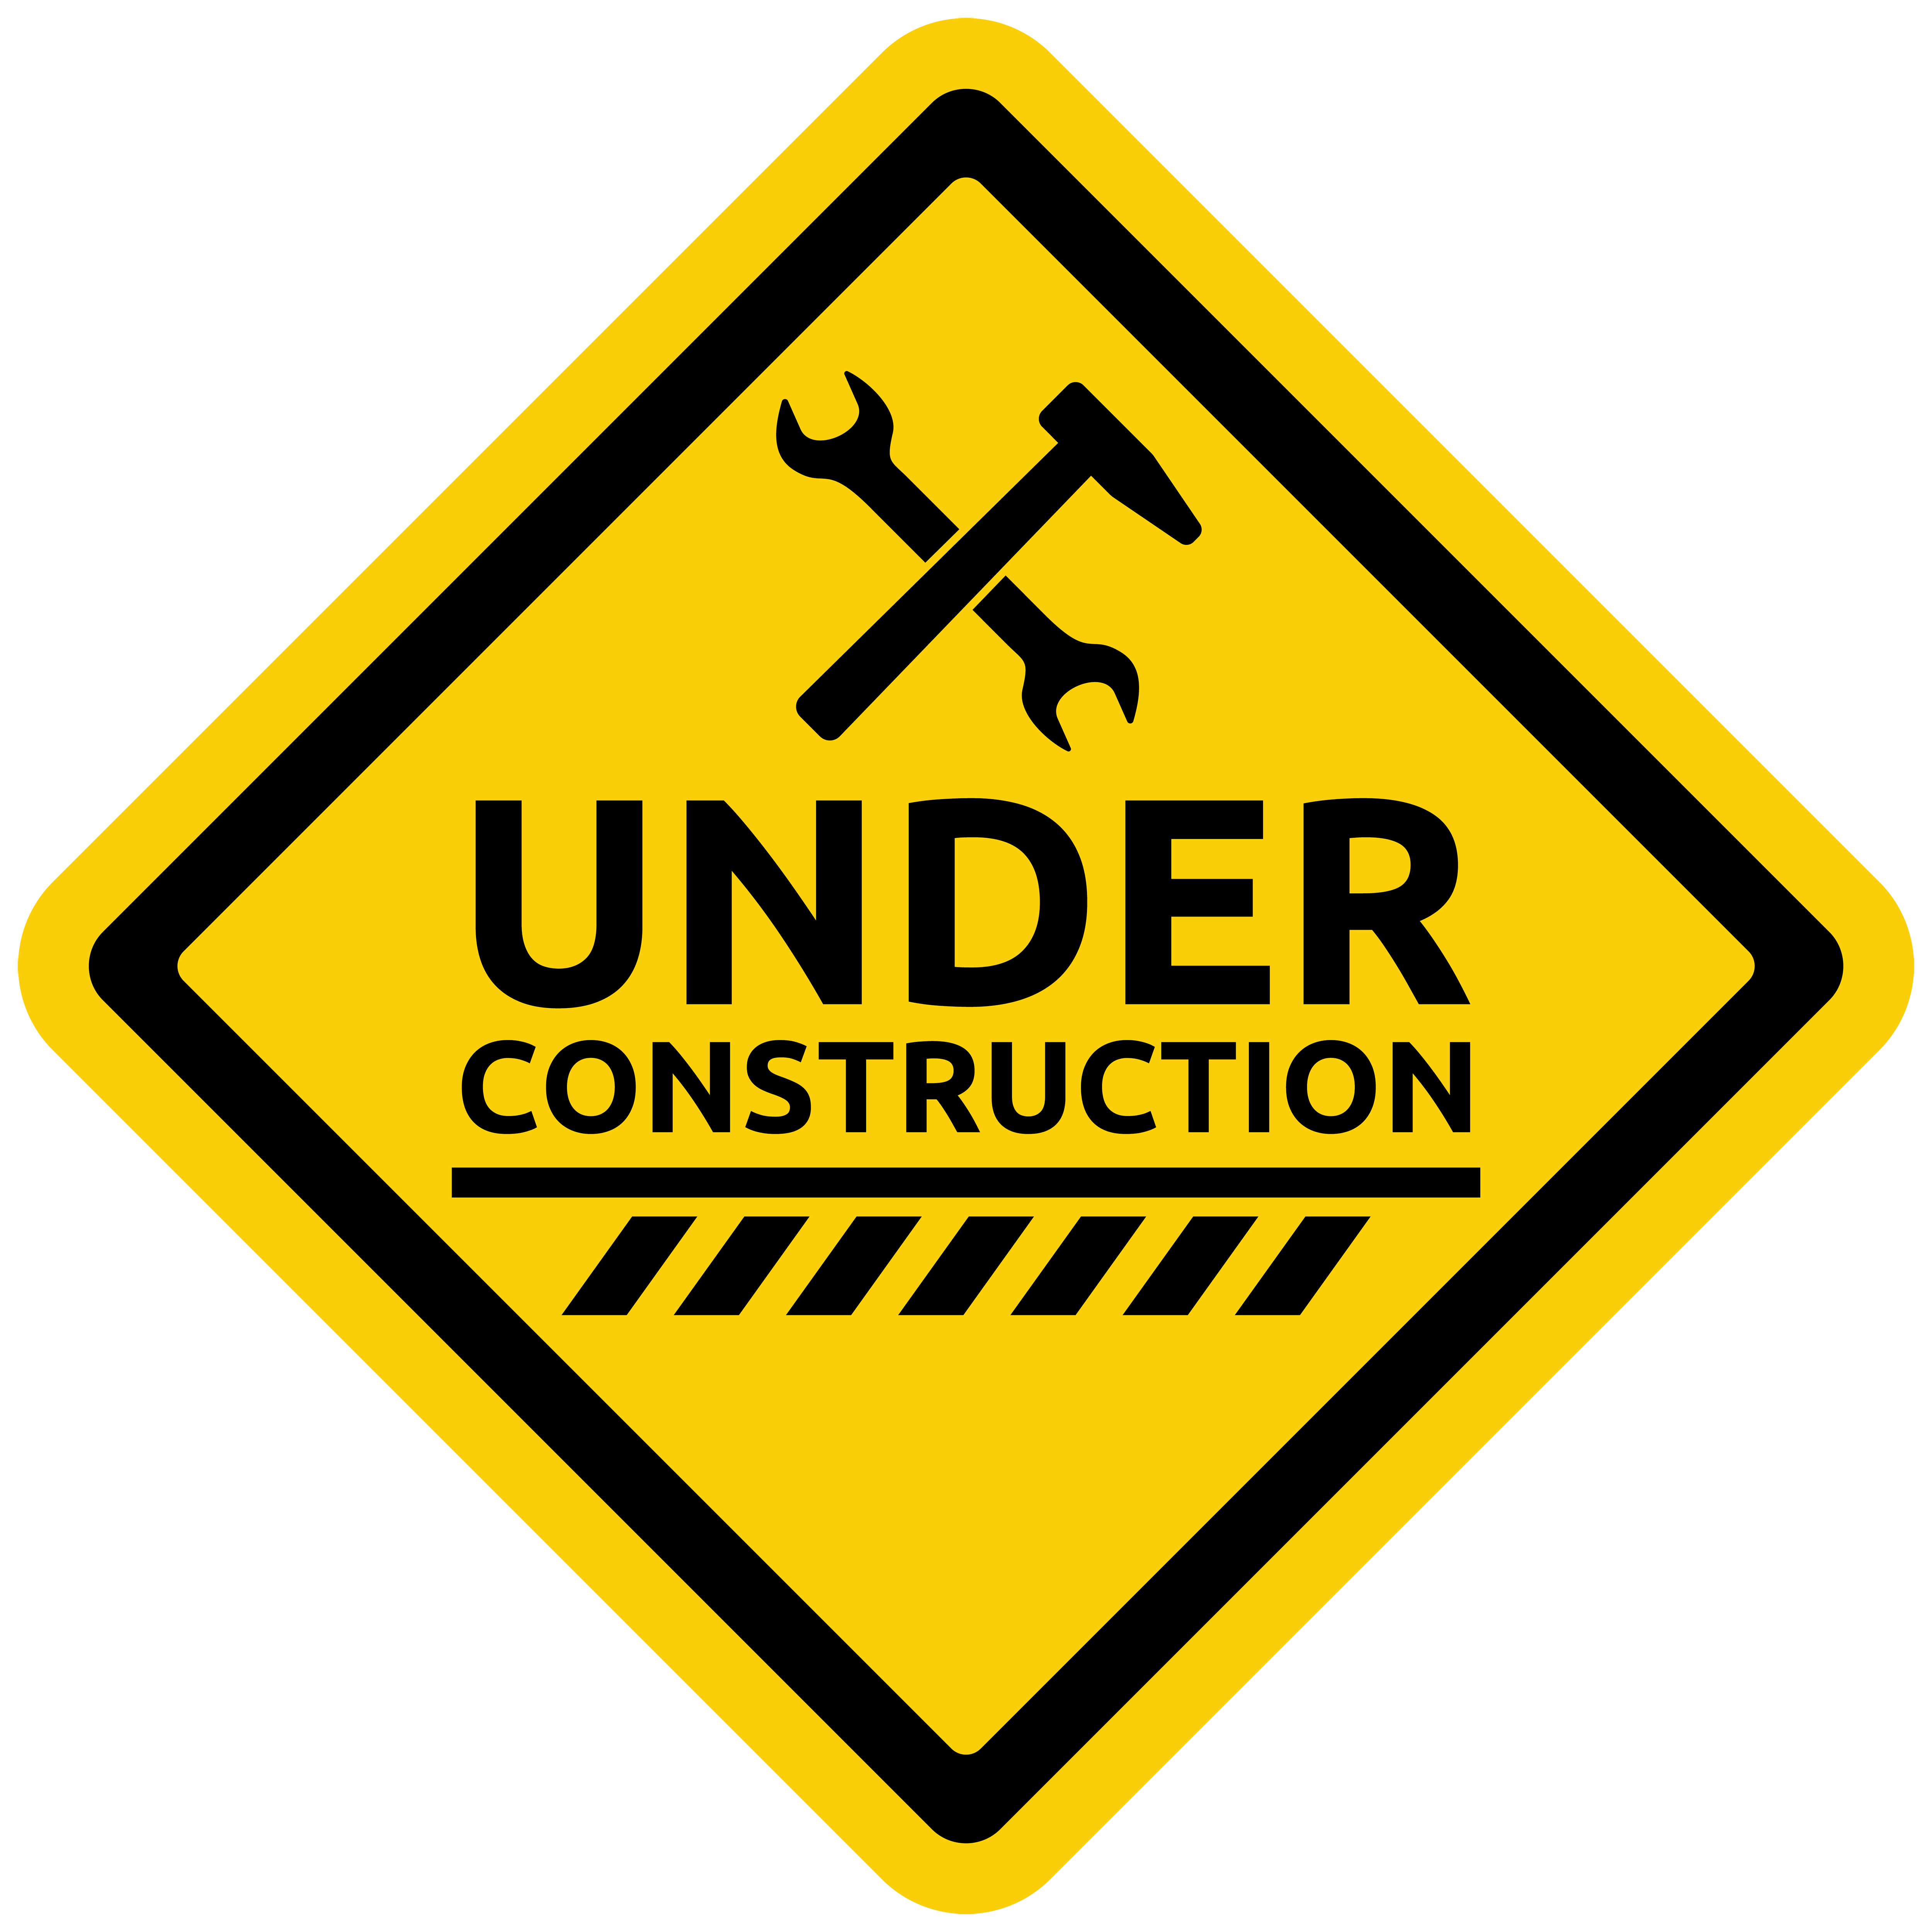 Website clipart under construction. Warning sign png best